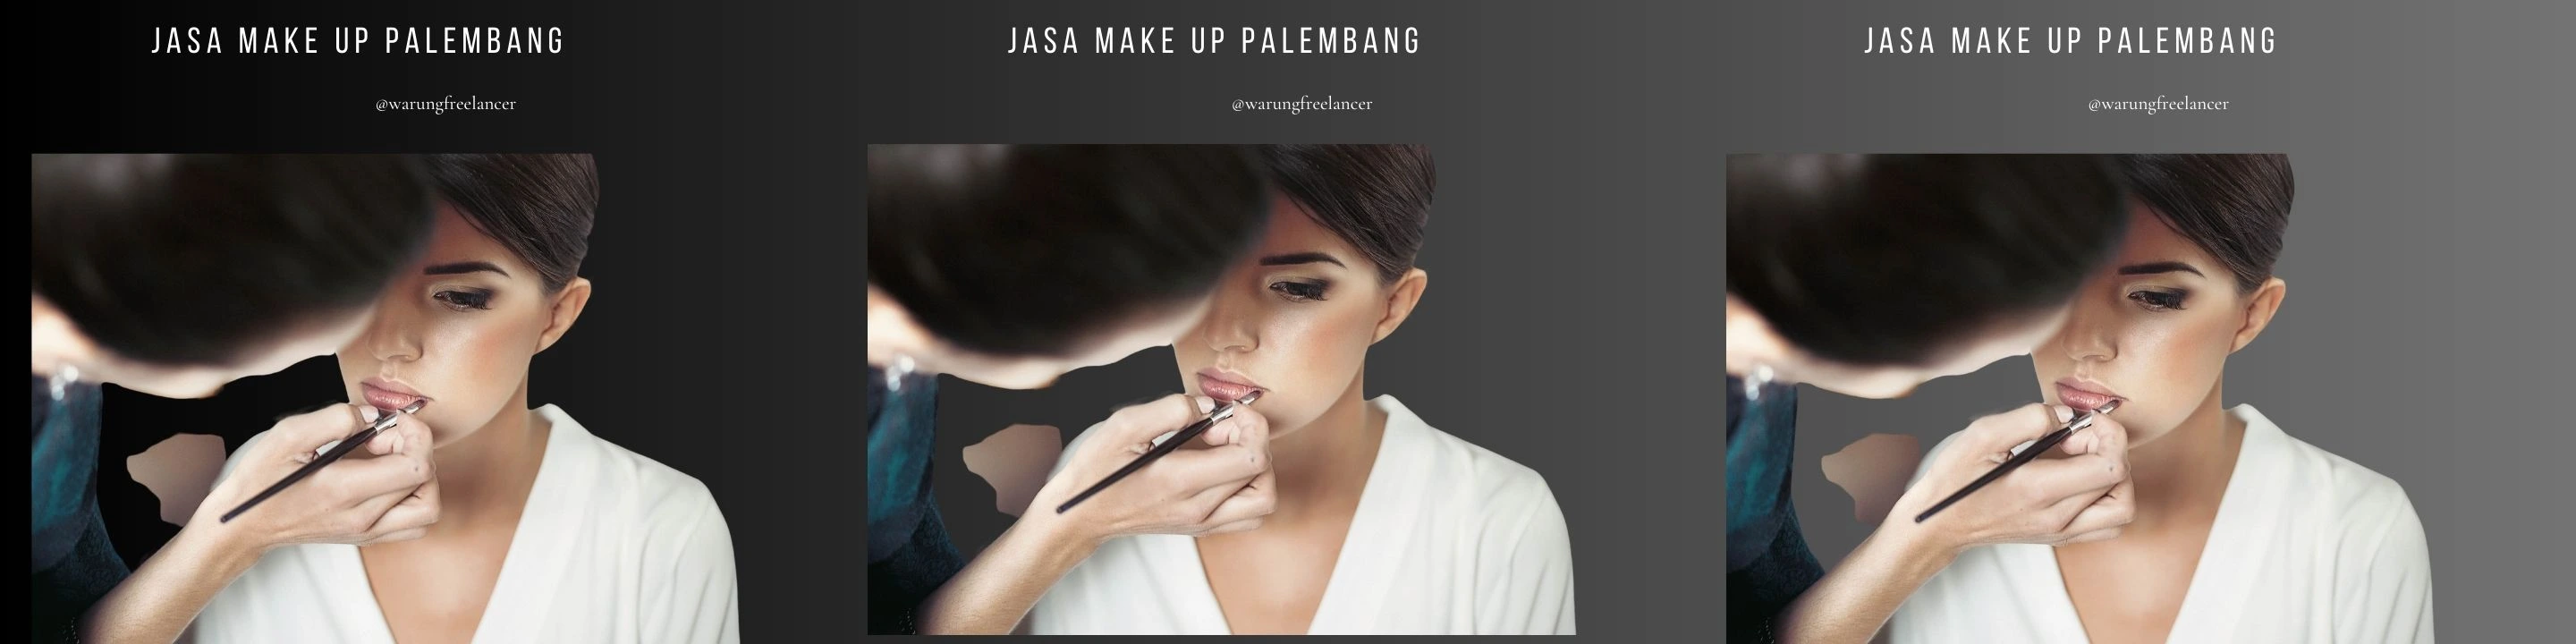 Jasa Make Up Palembang